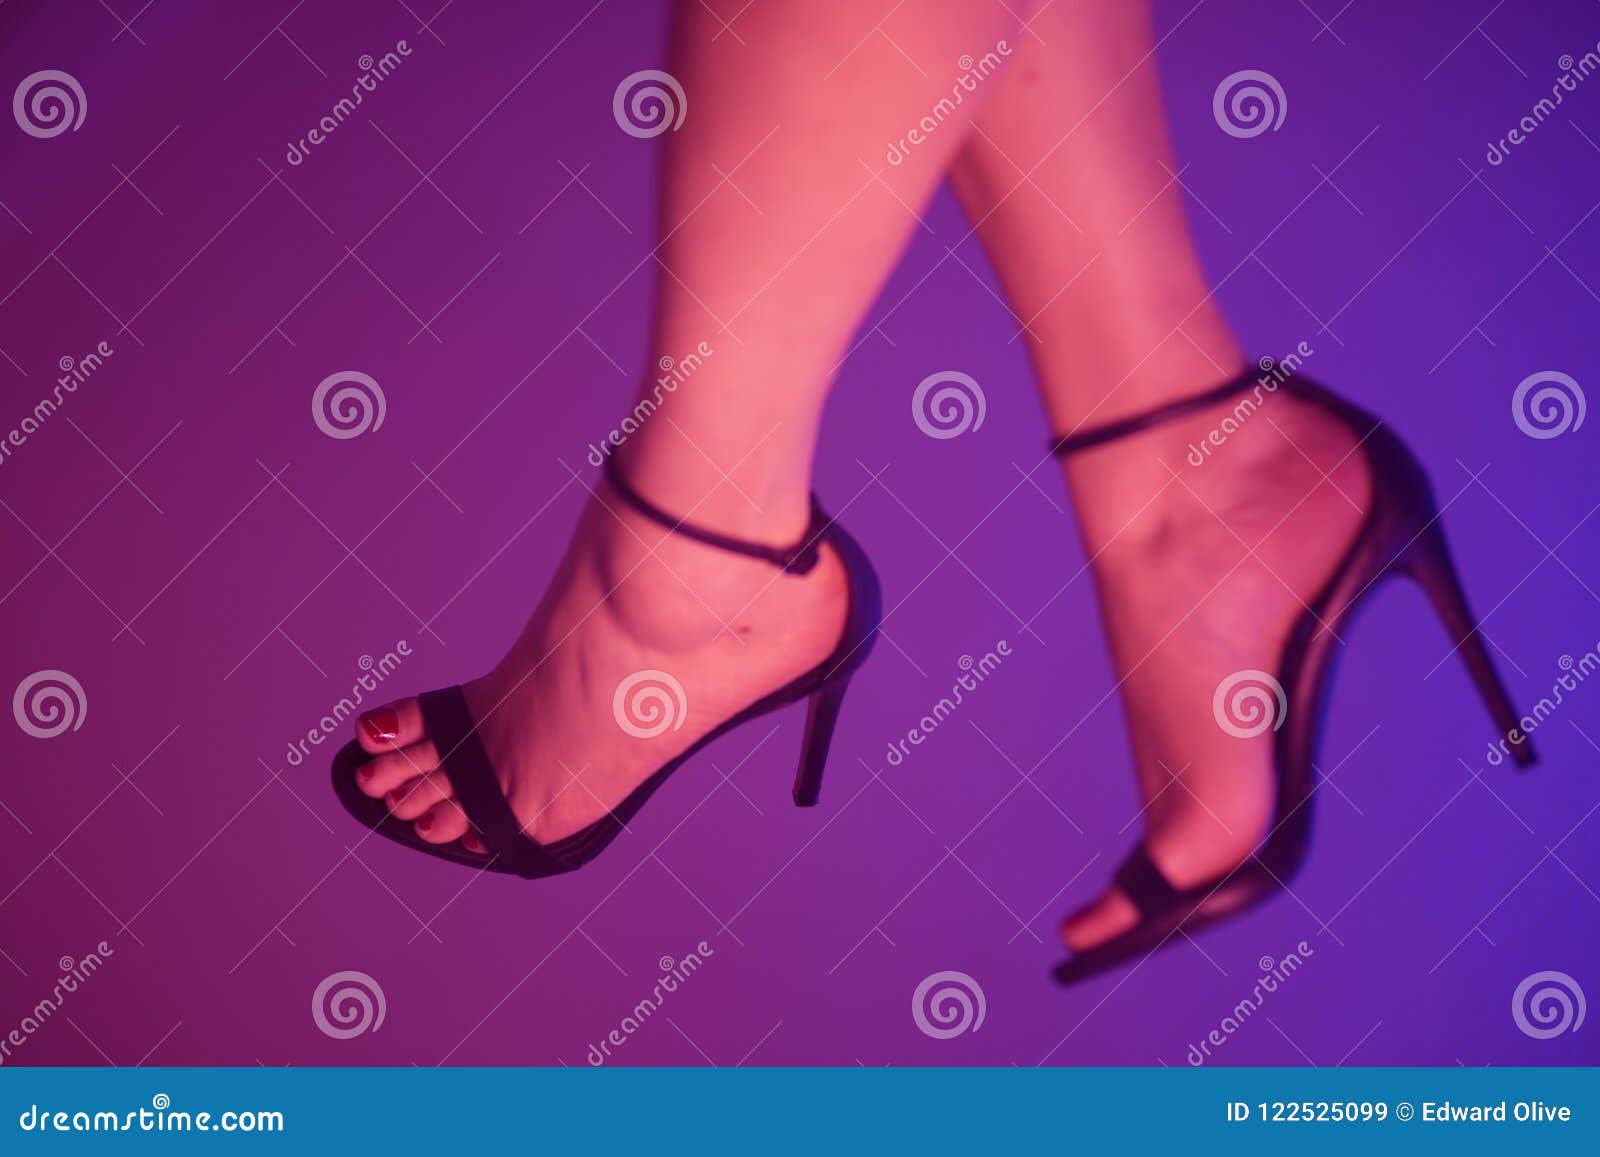 Sexy feet in heels